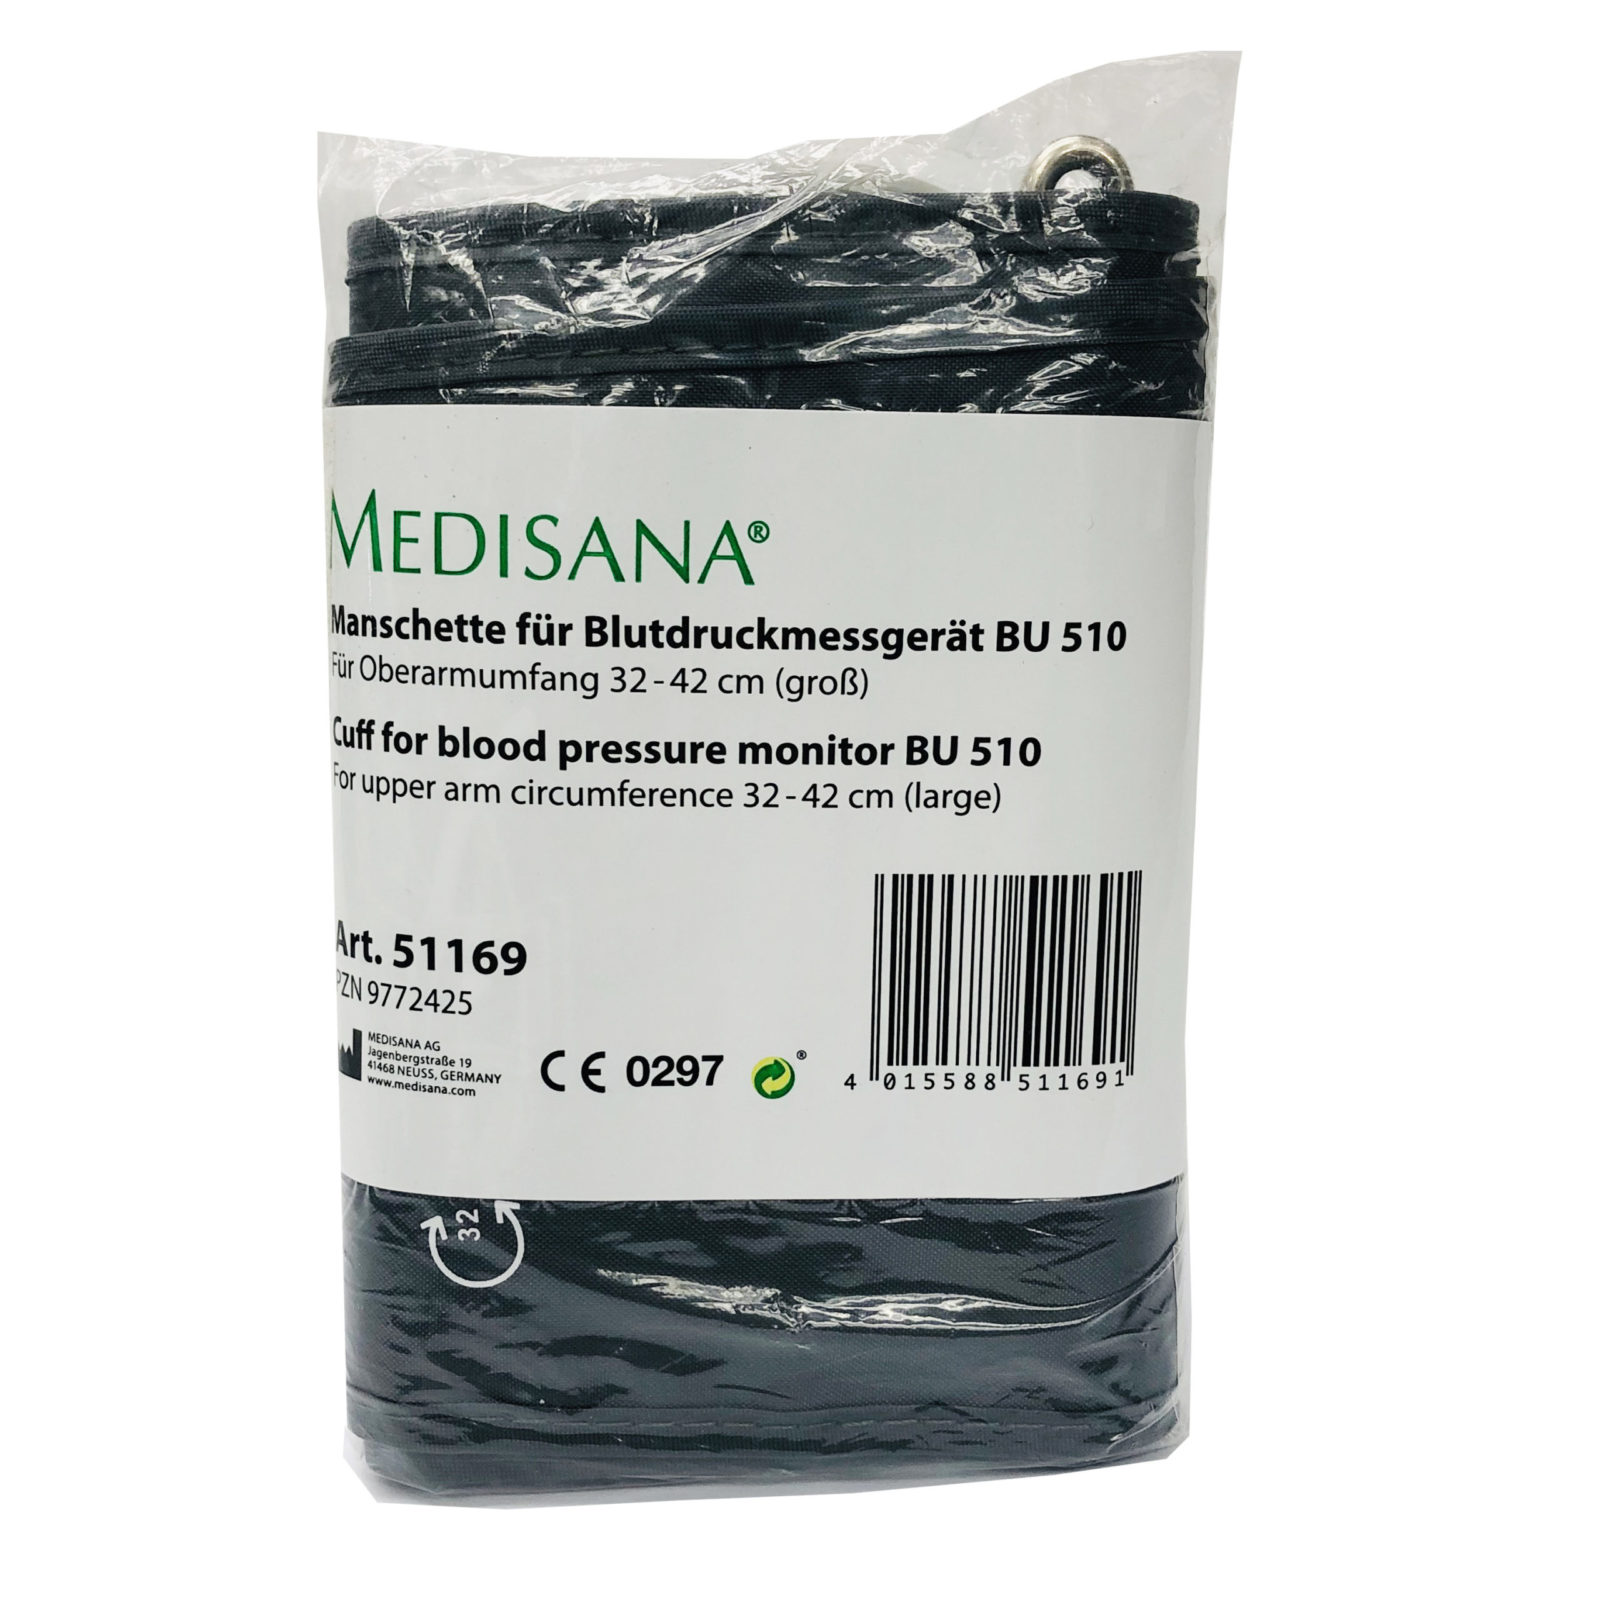 Medisana Bu510 / Bu530 L Pharmacy (for (32-42cm) Alpro Sell) - Cuff